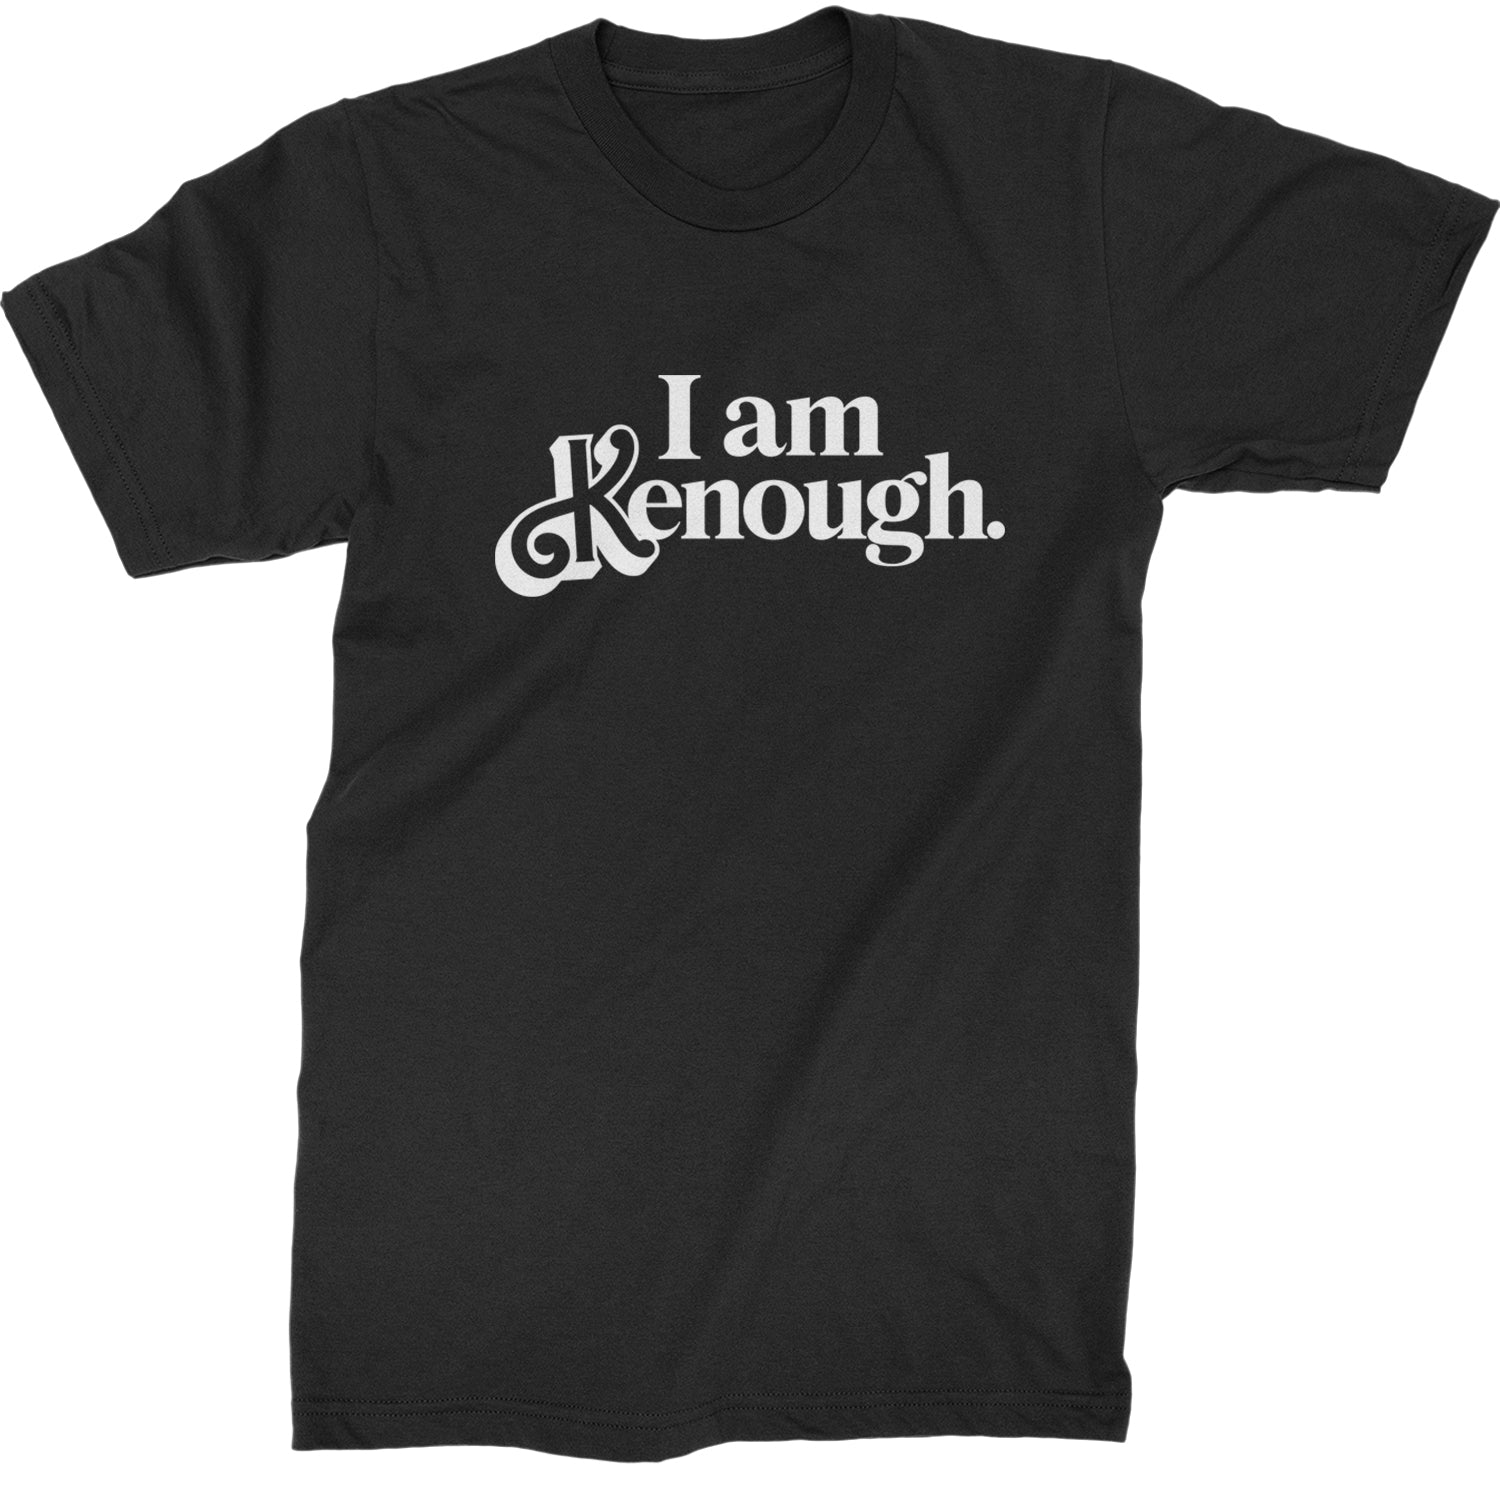 I Am Kenough White Print Mens T-shirt